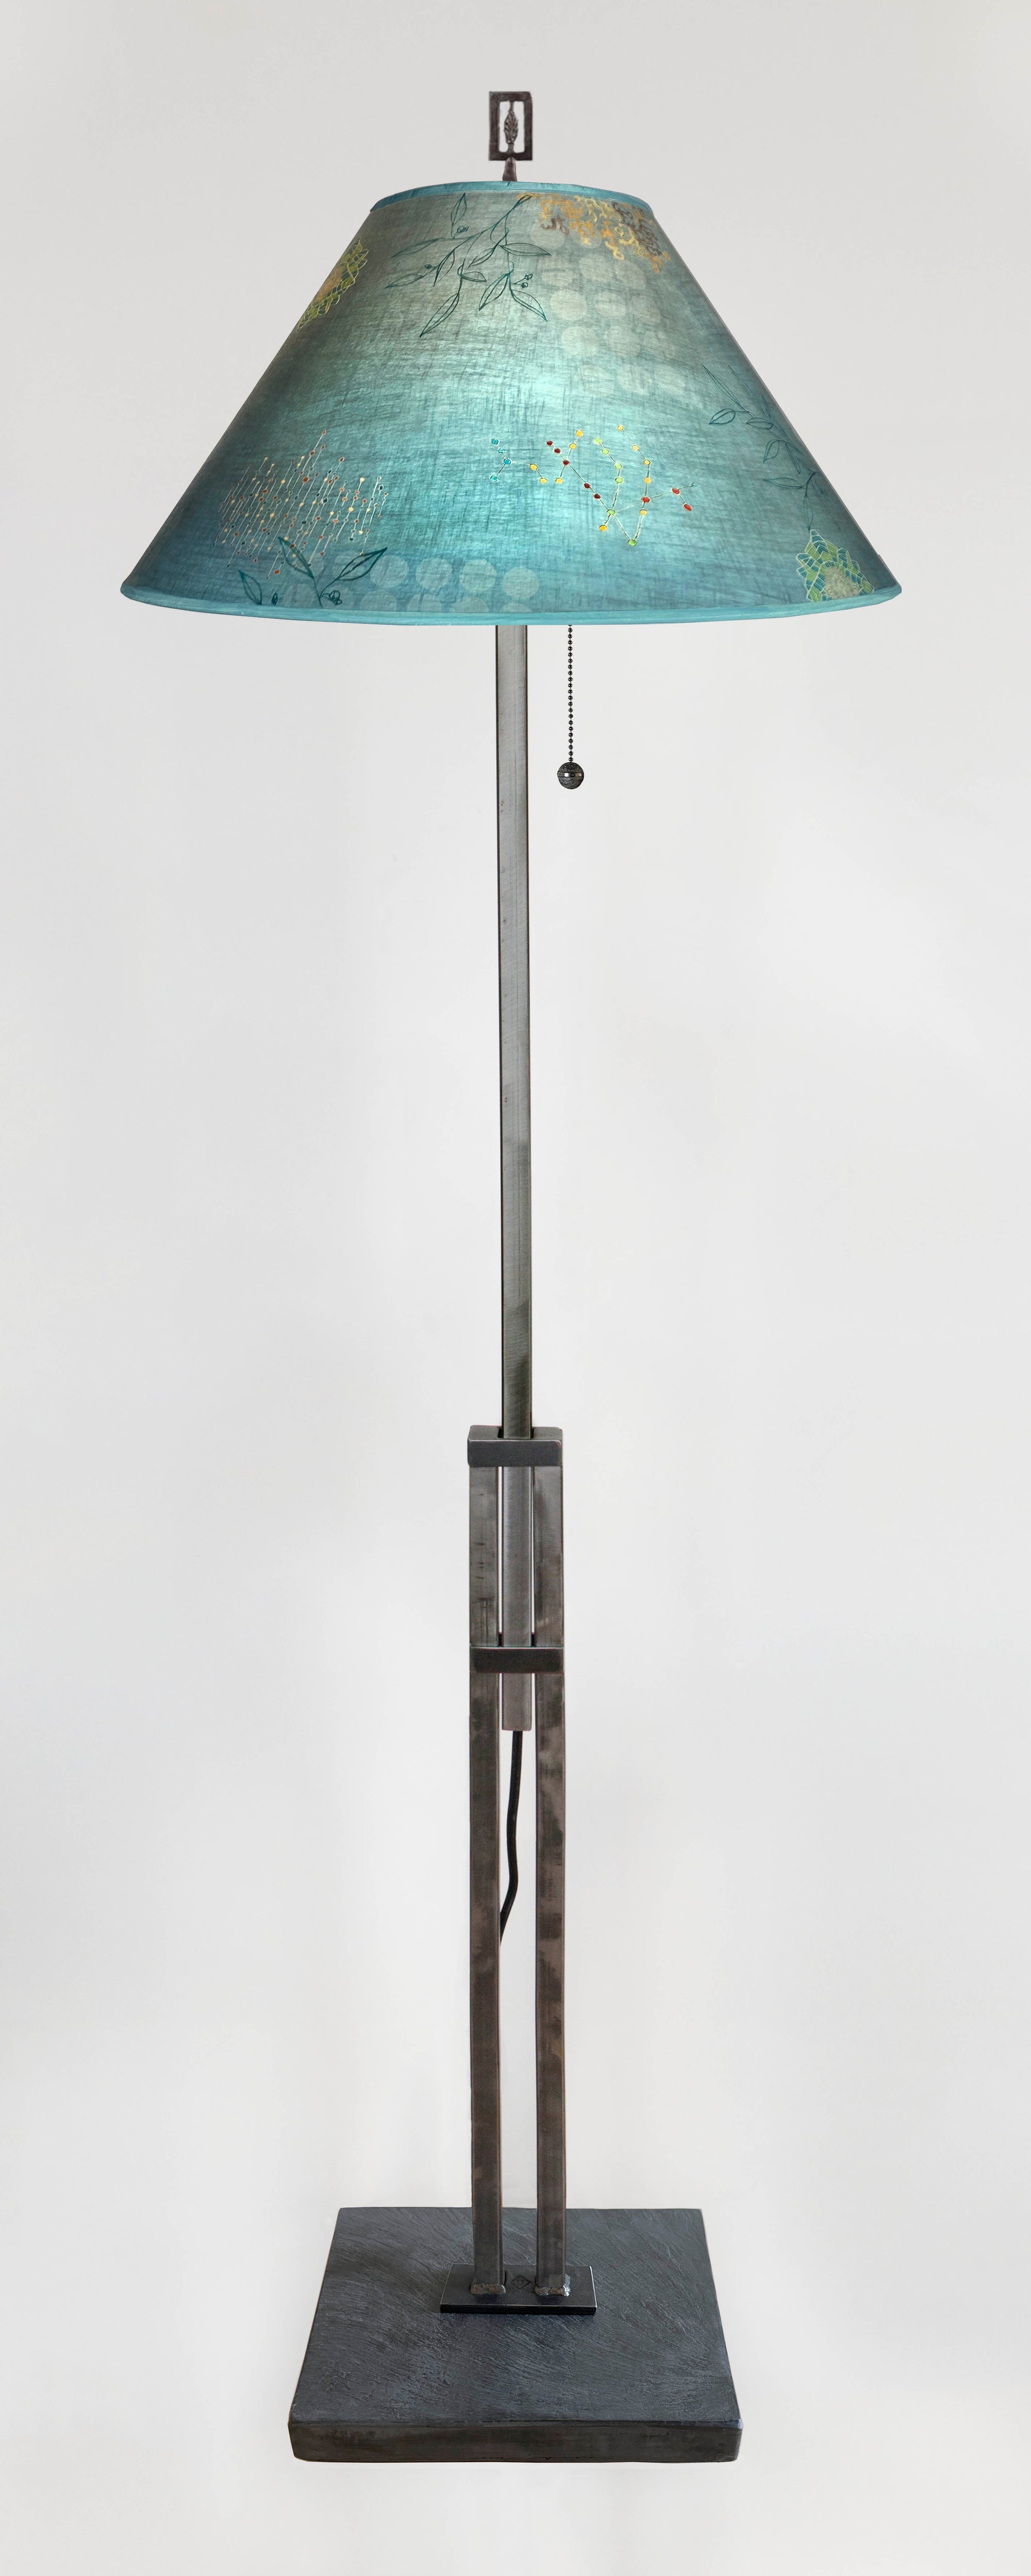 Janna Ugone & Co Floor Lamp Adjustable-Height Steel Floor Lamp with Large Conical Shade in Journeys in Jasper